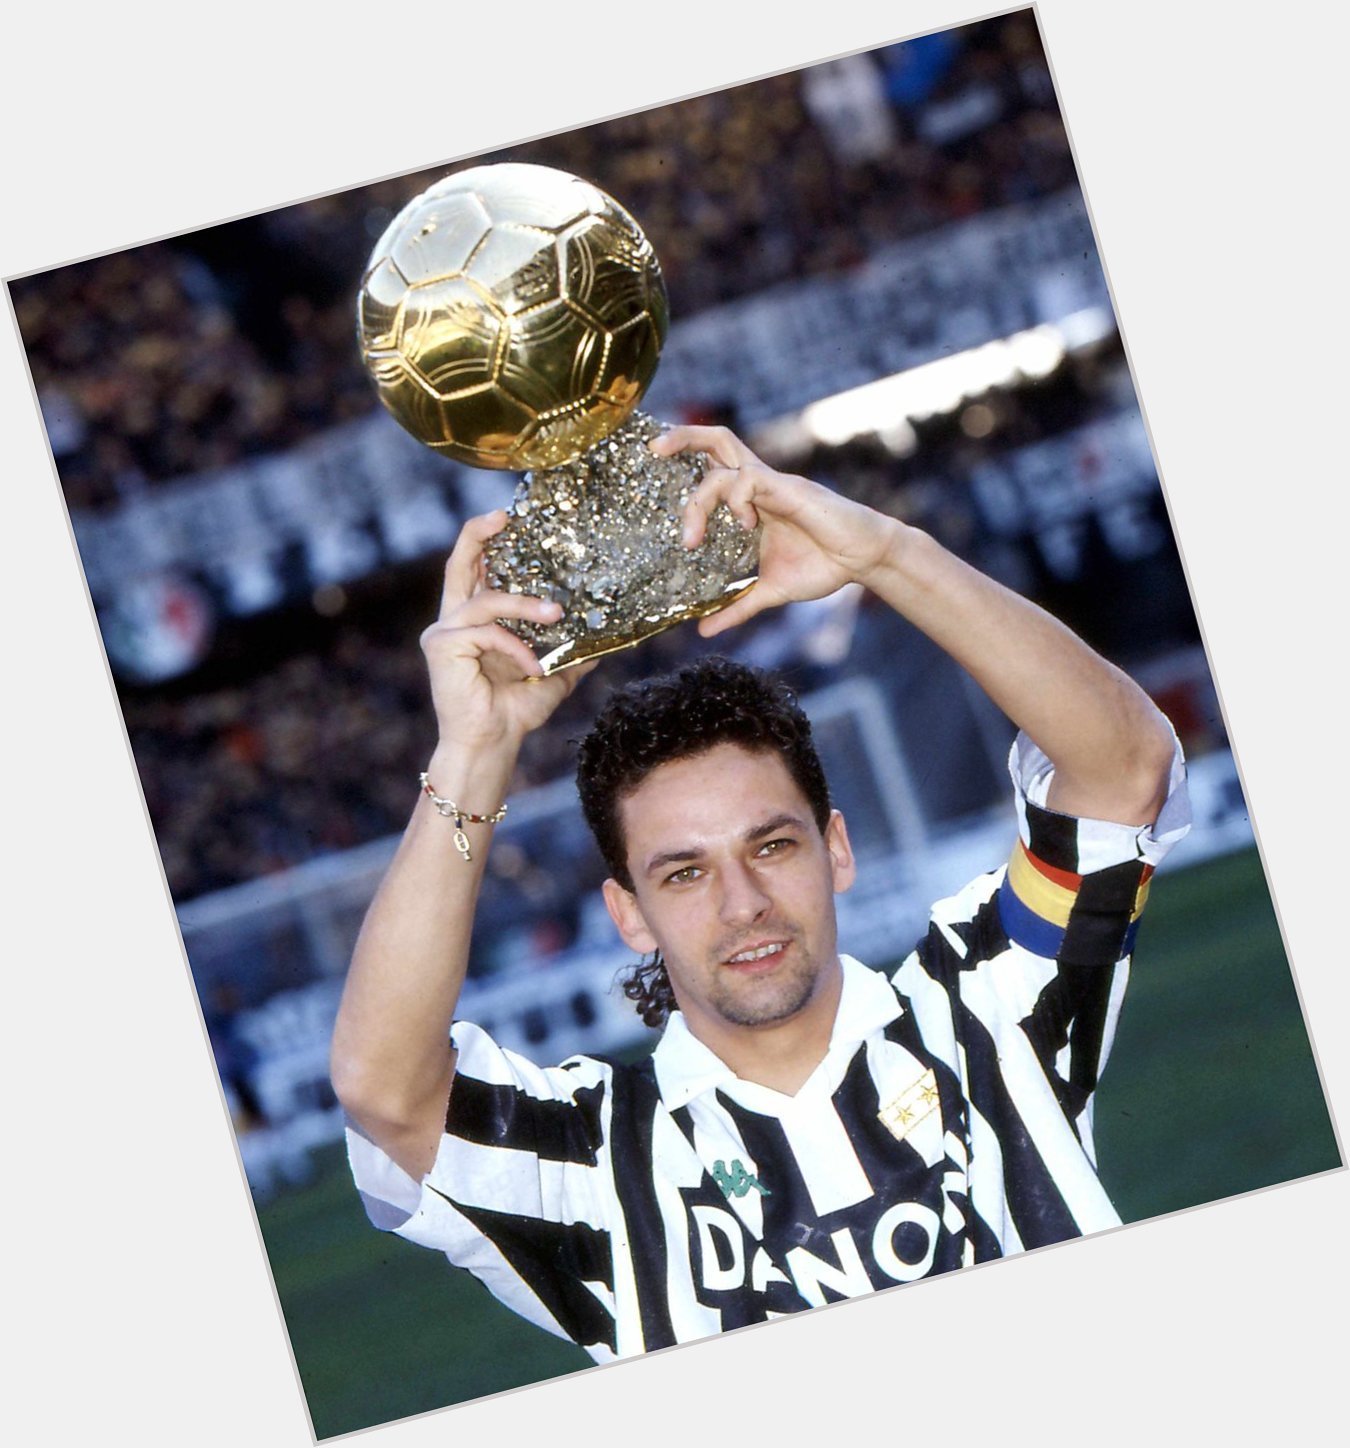 Happy 50th birthday to Juventus legend Roberto Baggio:
Games: 200 
Goals: 115 